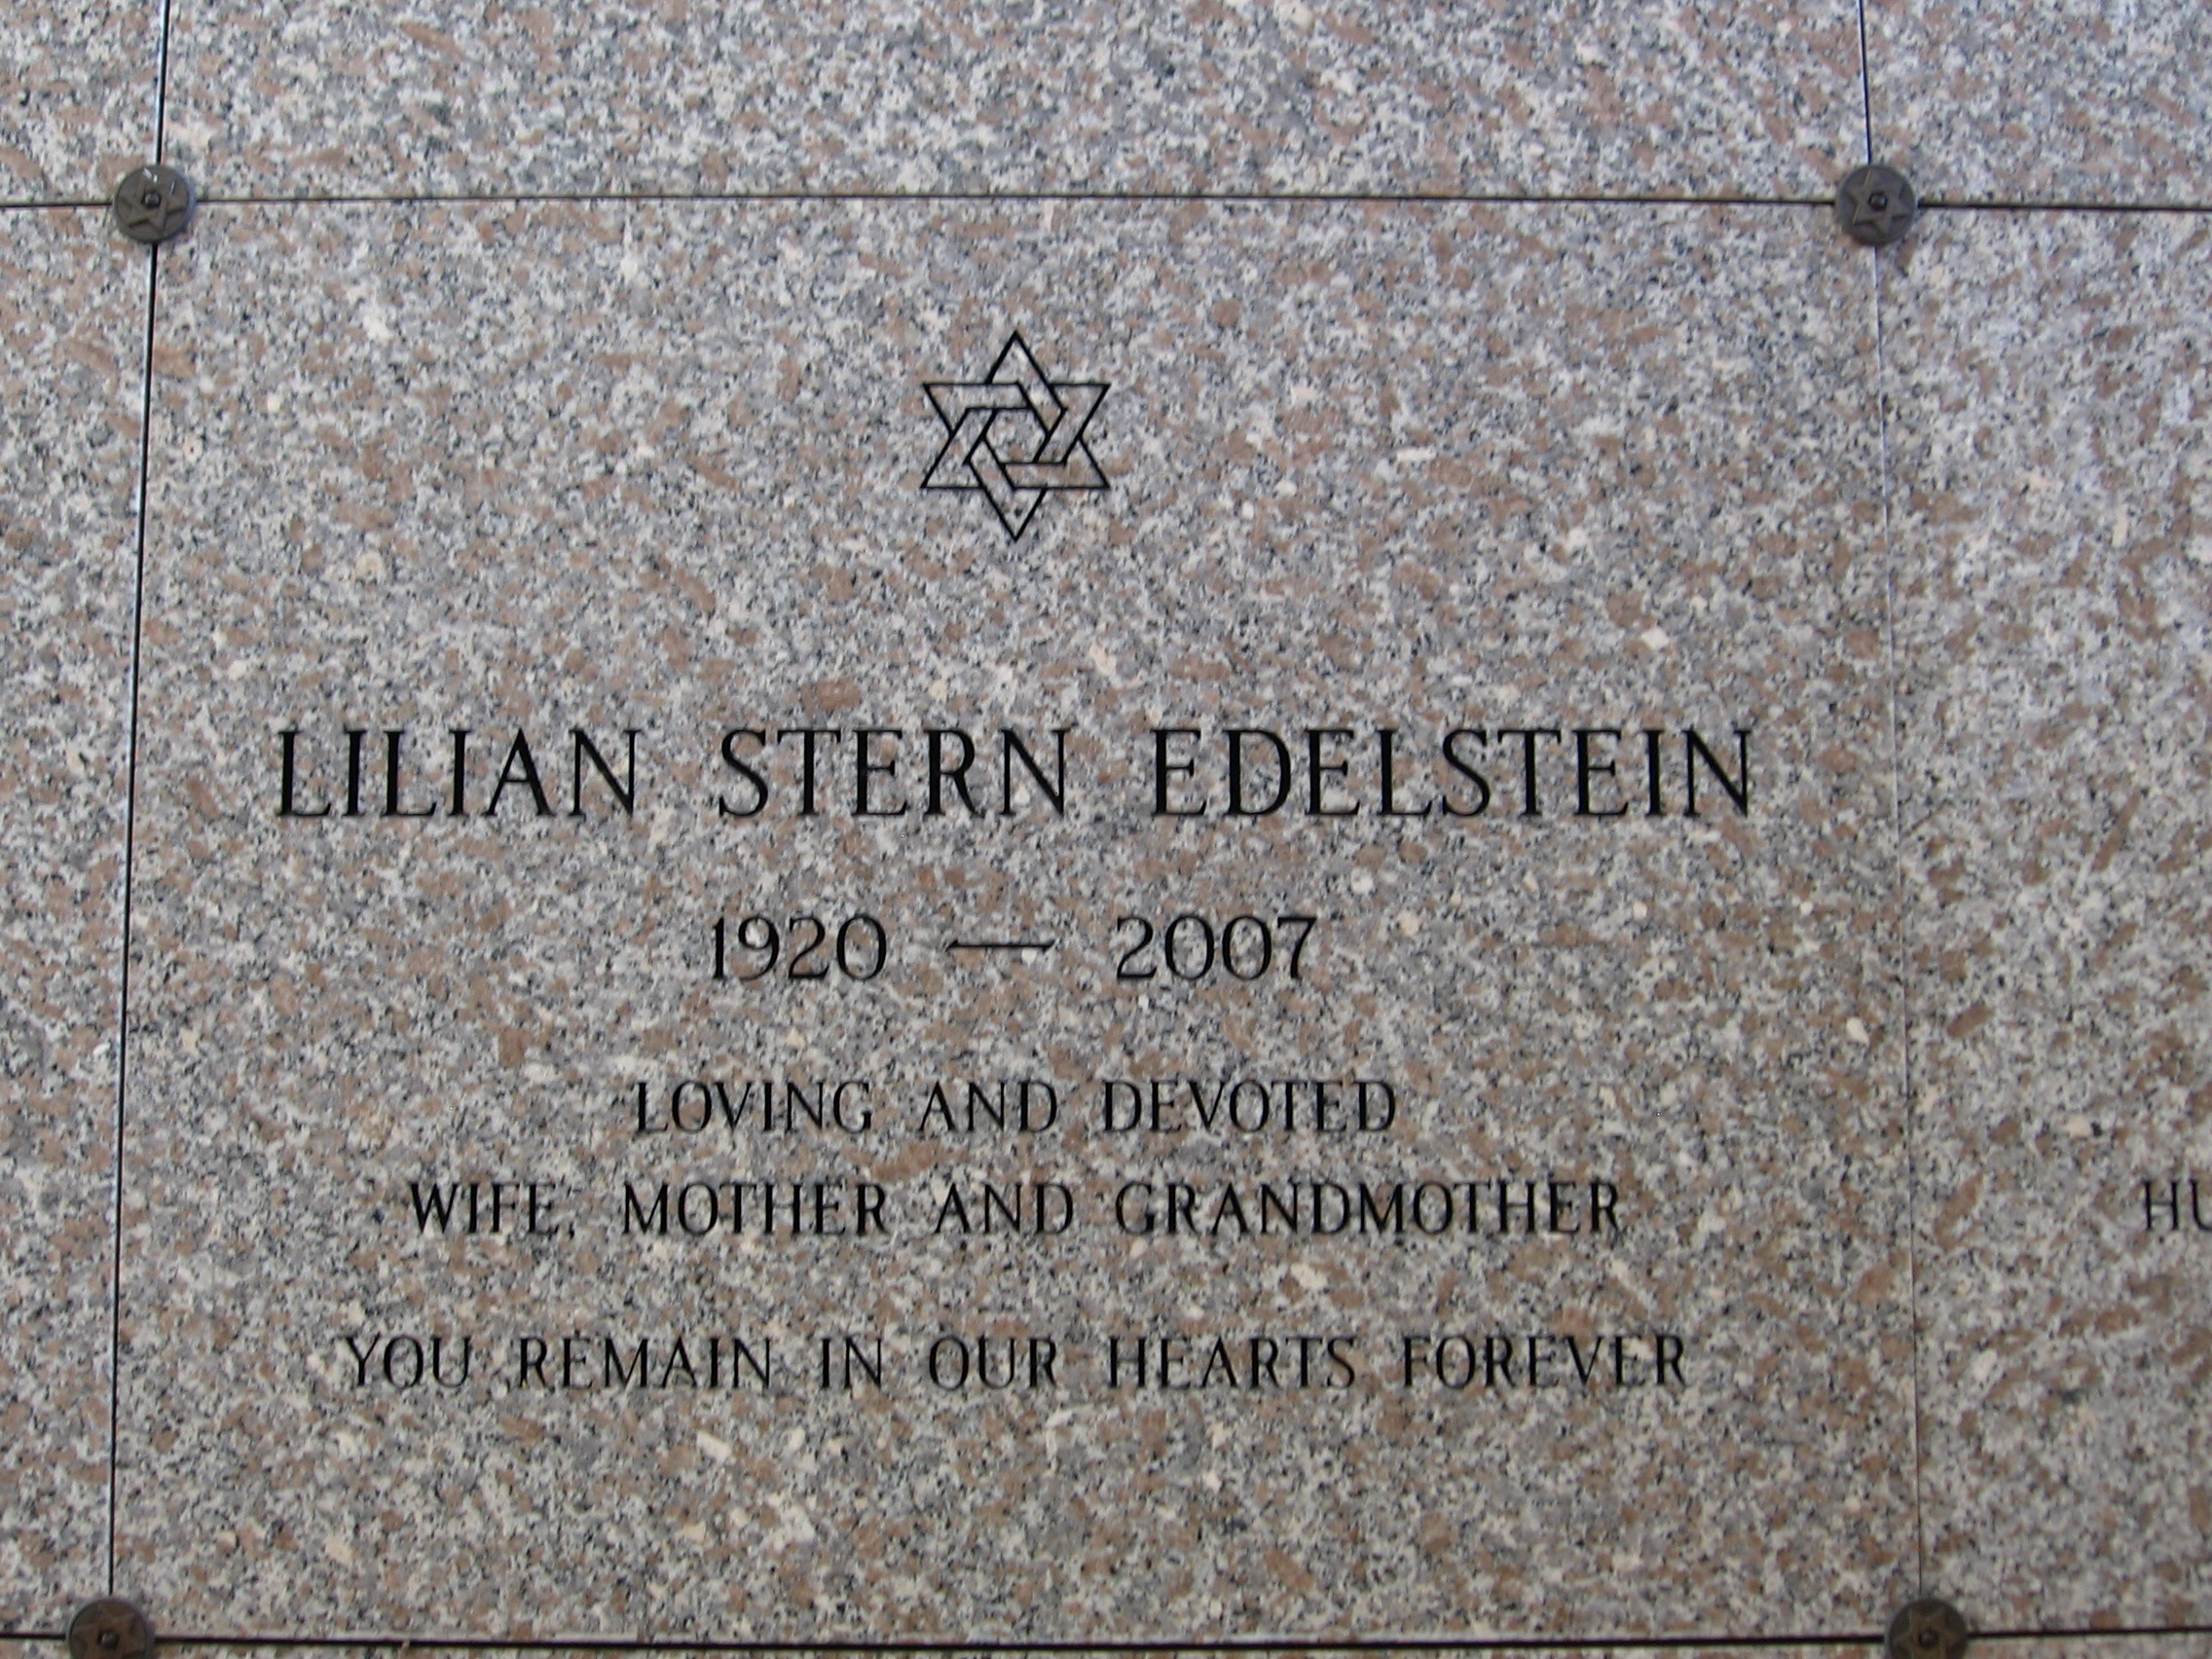 Lillian Stern Edelstein